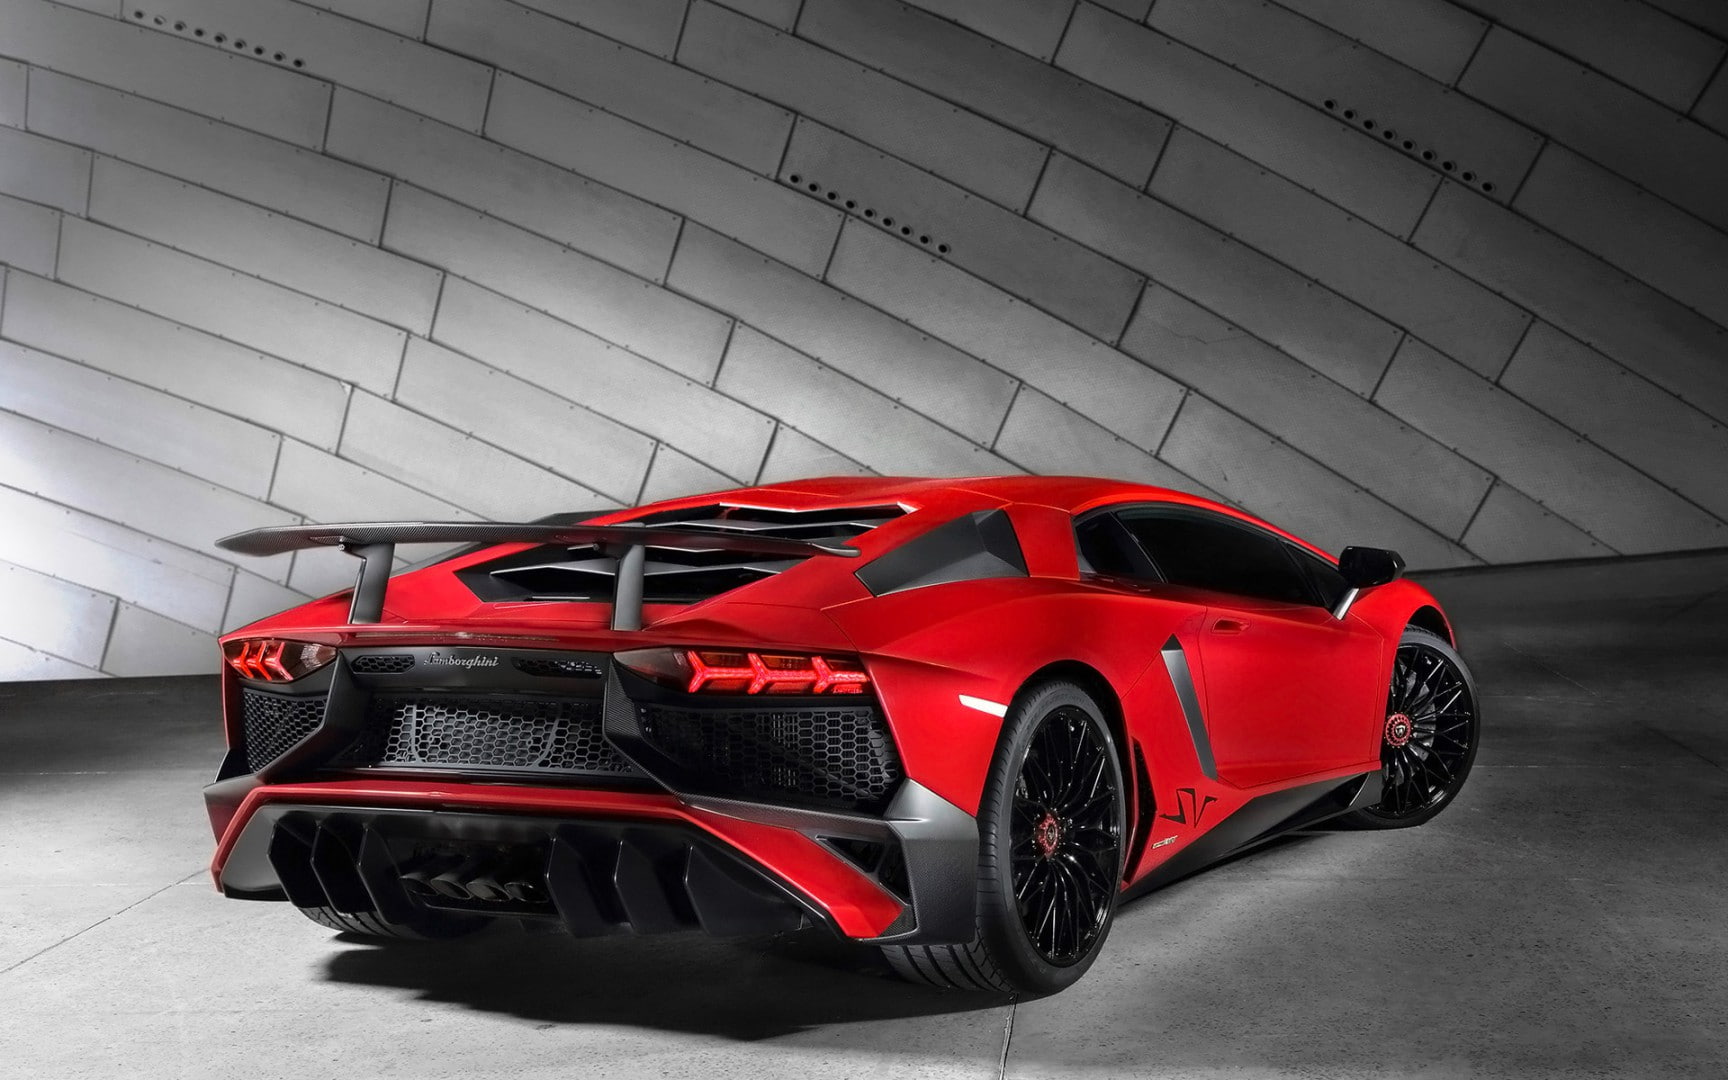 2015 Lamborghini Aventador LP750 4 Superveloce 2 Car HD, red lamborghini sports car